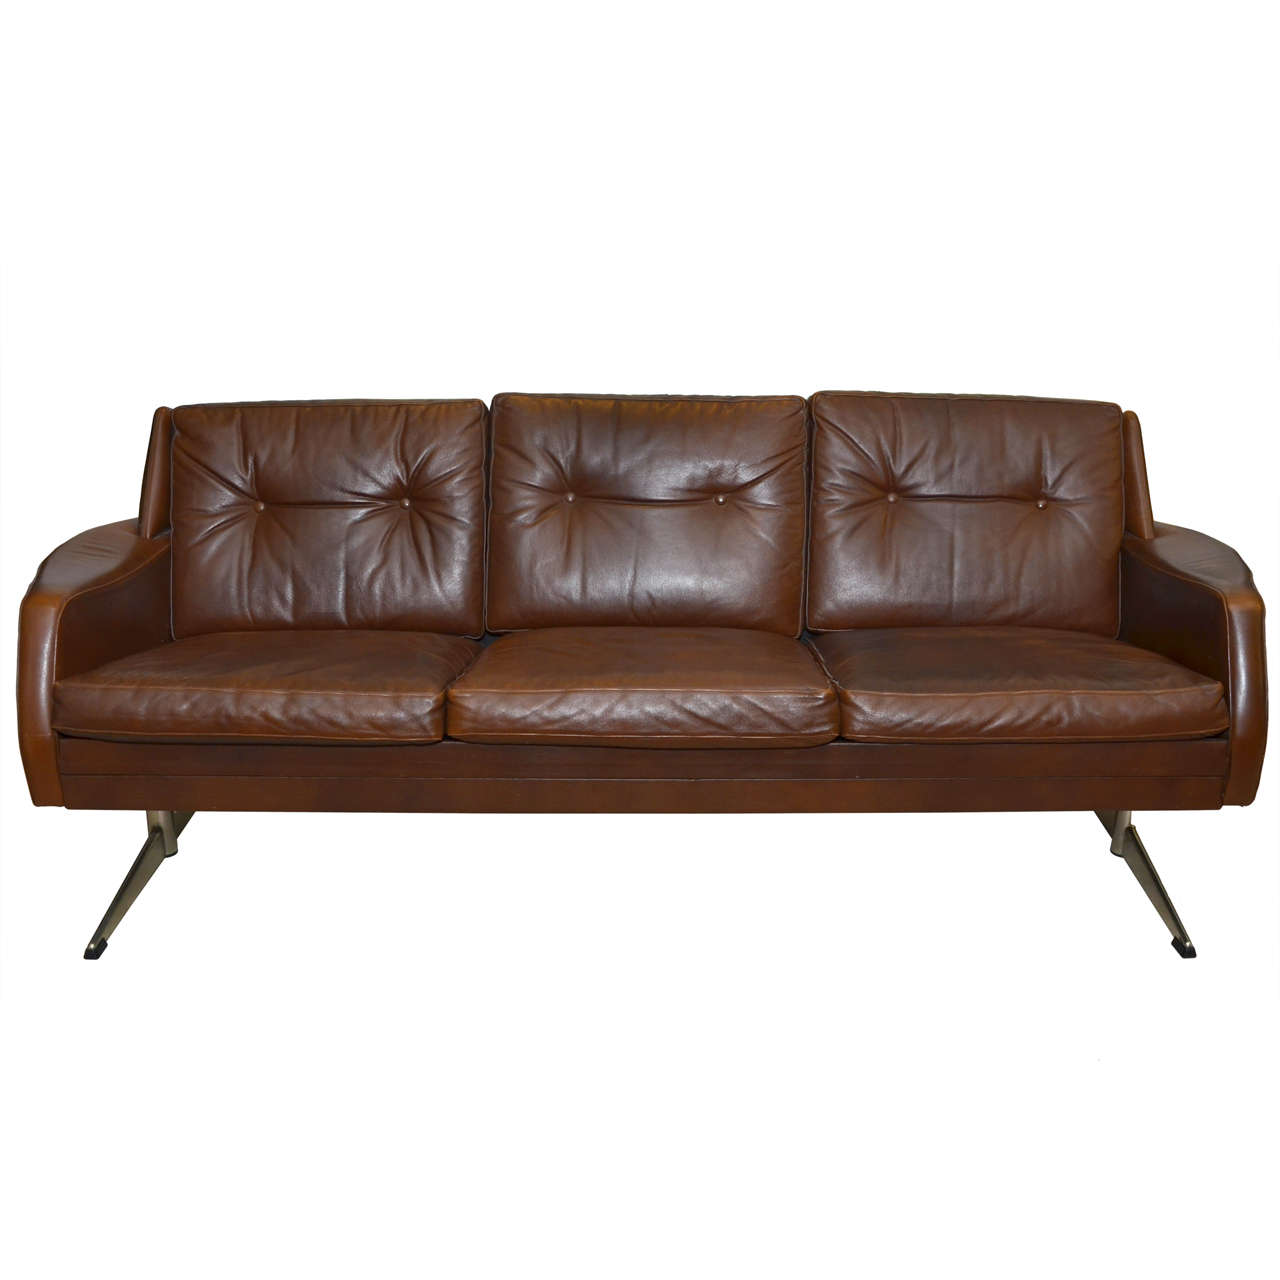 1970's Danish Leather Sofa For Sale